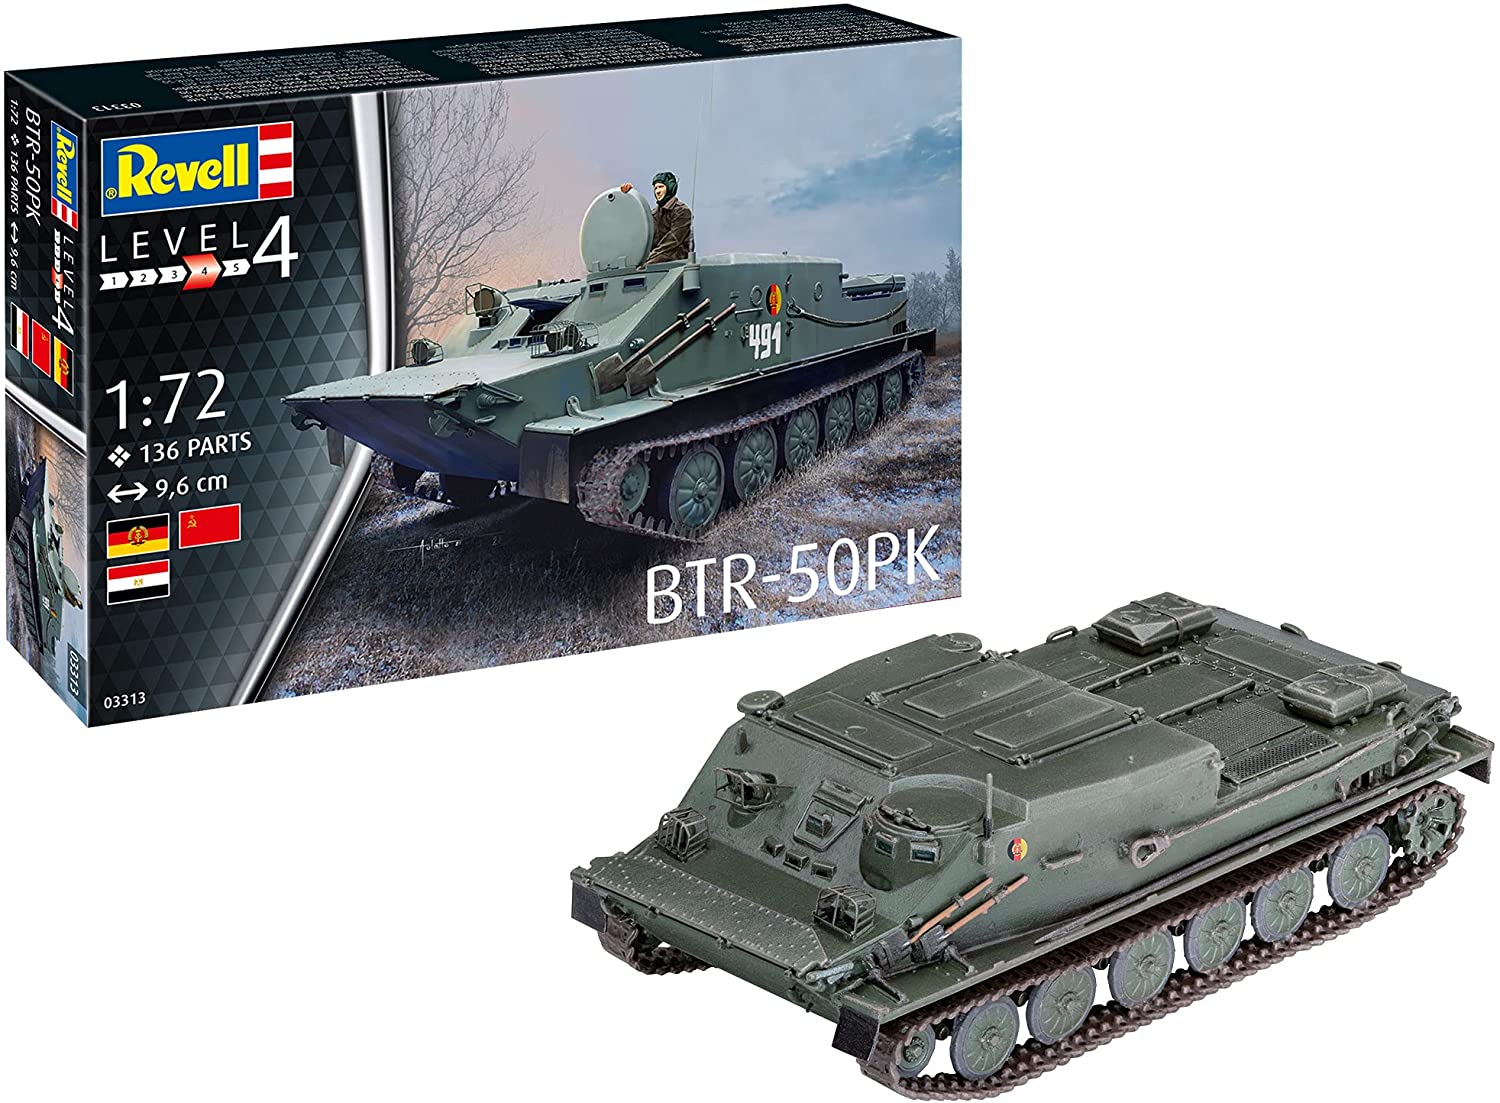 Revell 03313 - BTR-50PK. 1:72